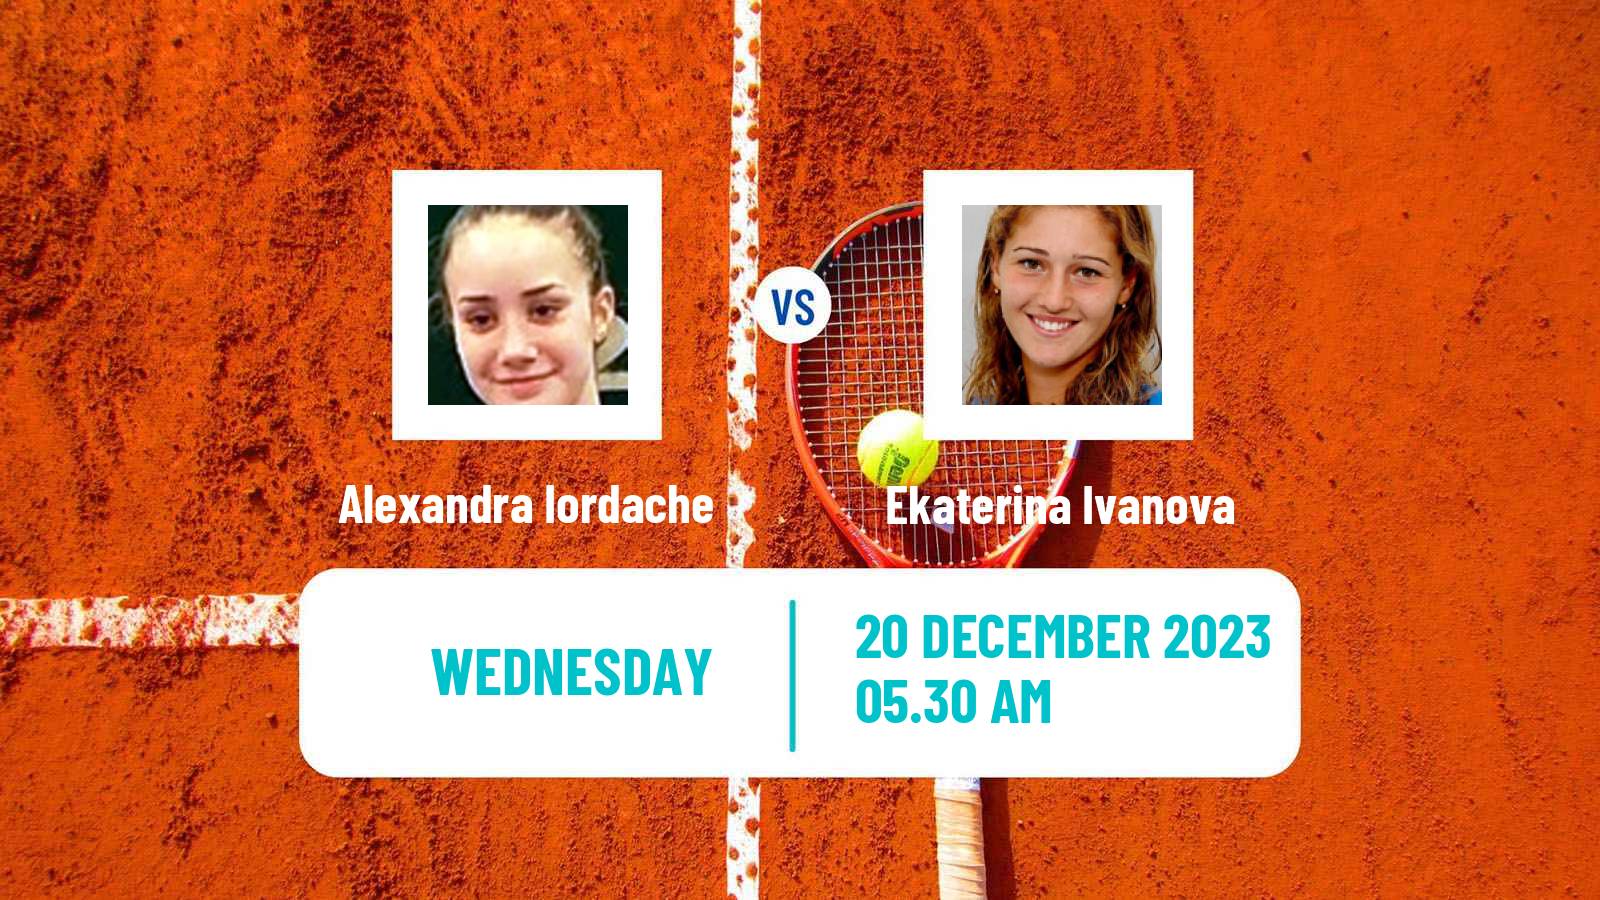 Tennis ITF W15 Antalya 23 Women Alexandra Iordache - Ekaterina Ivanova